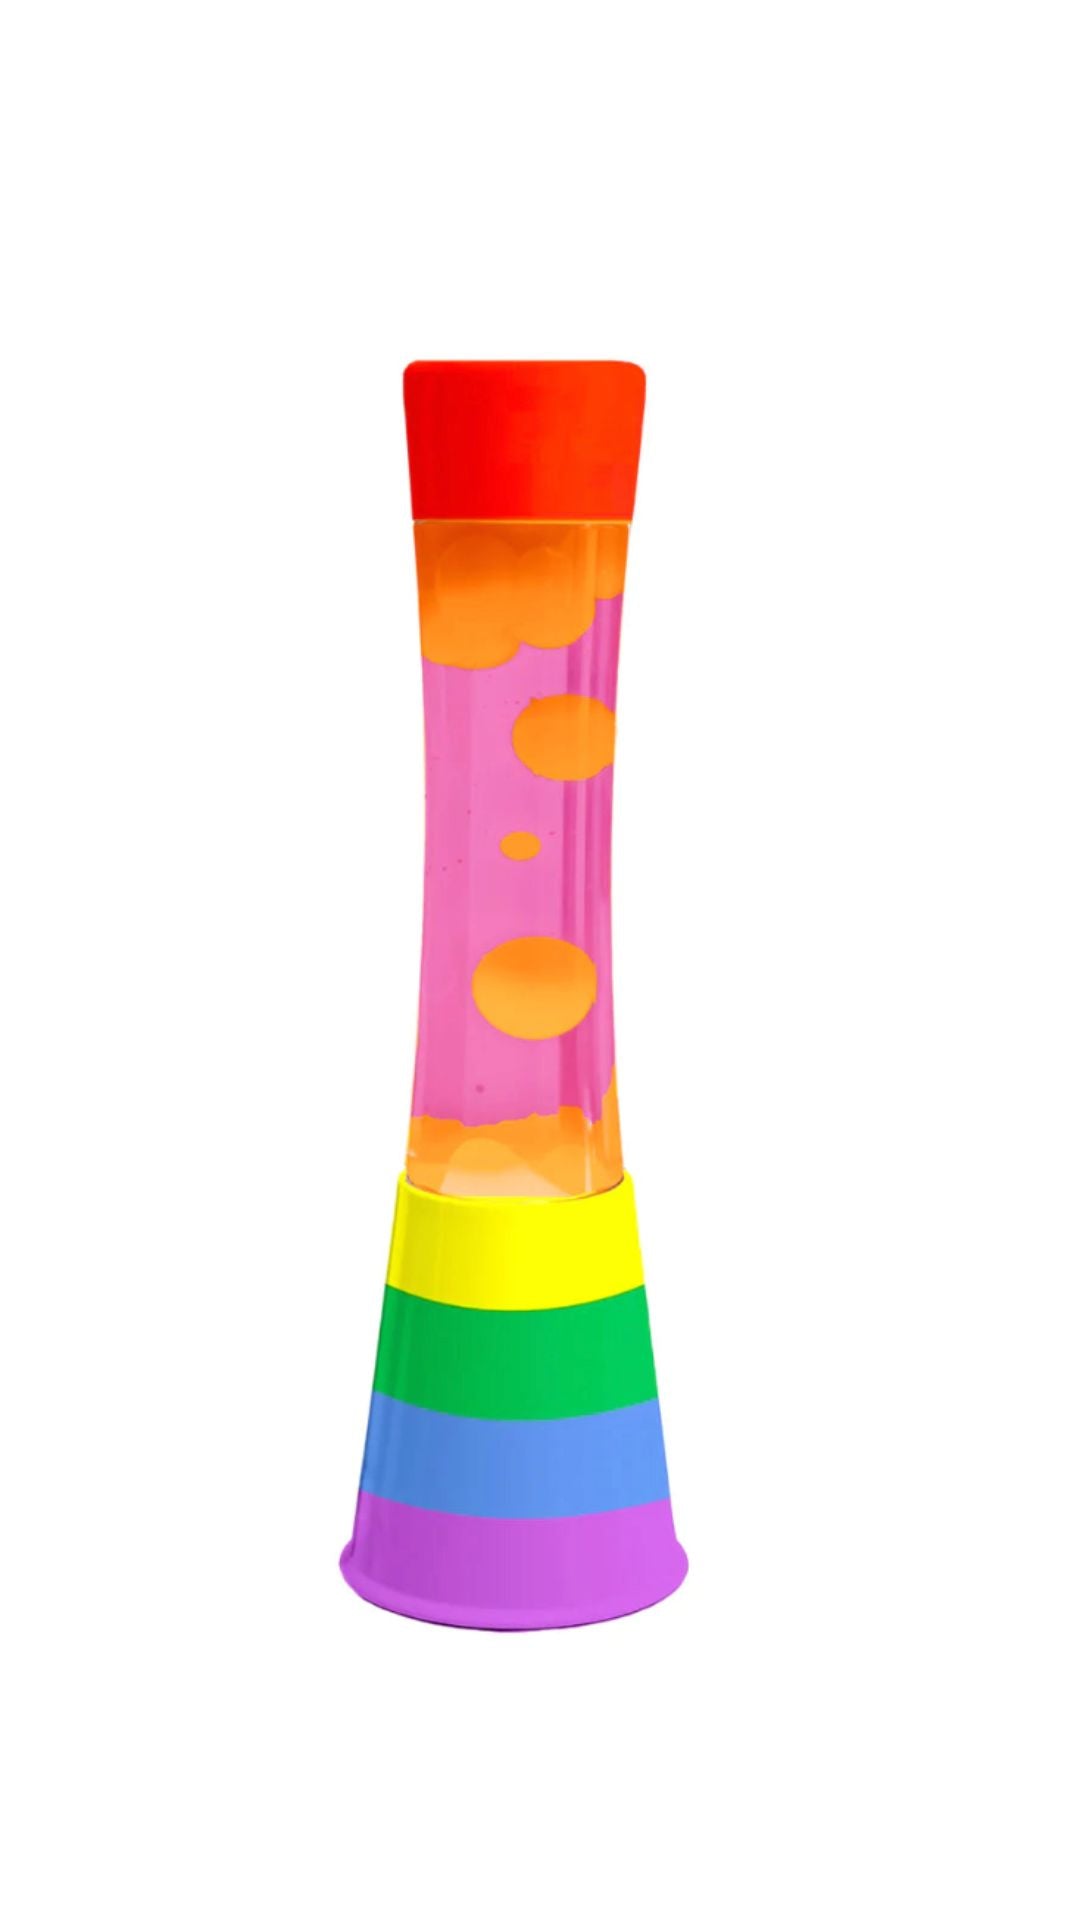 Rainbow Lava Lamp